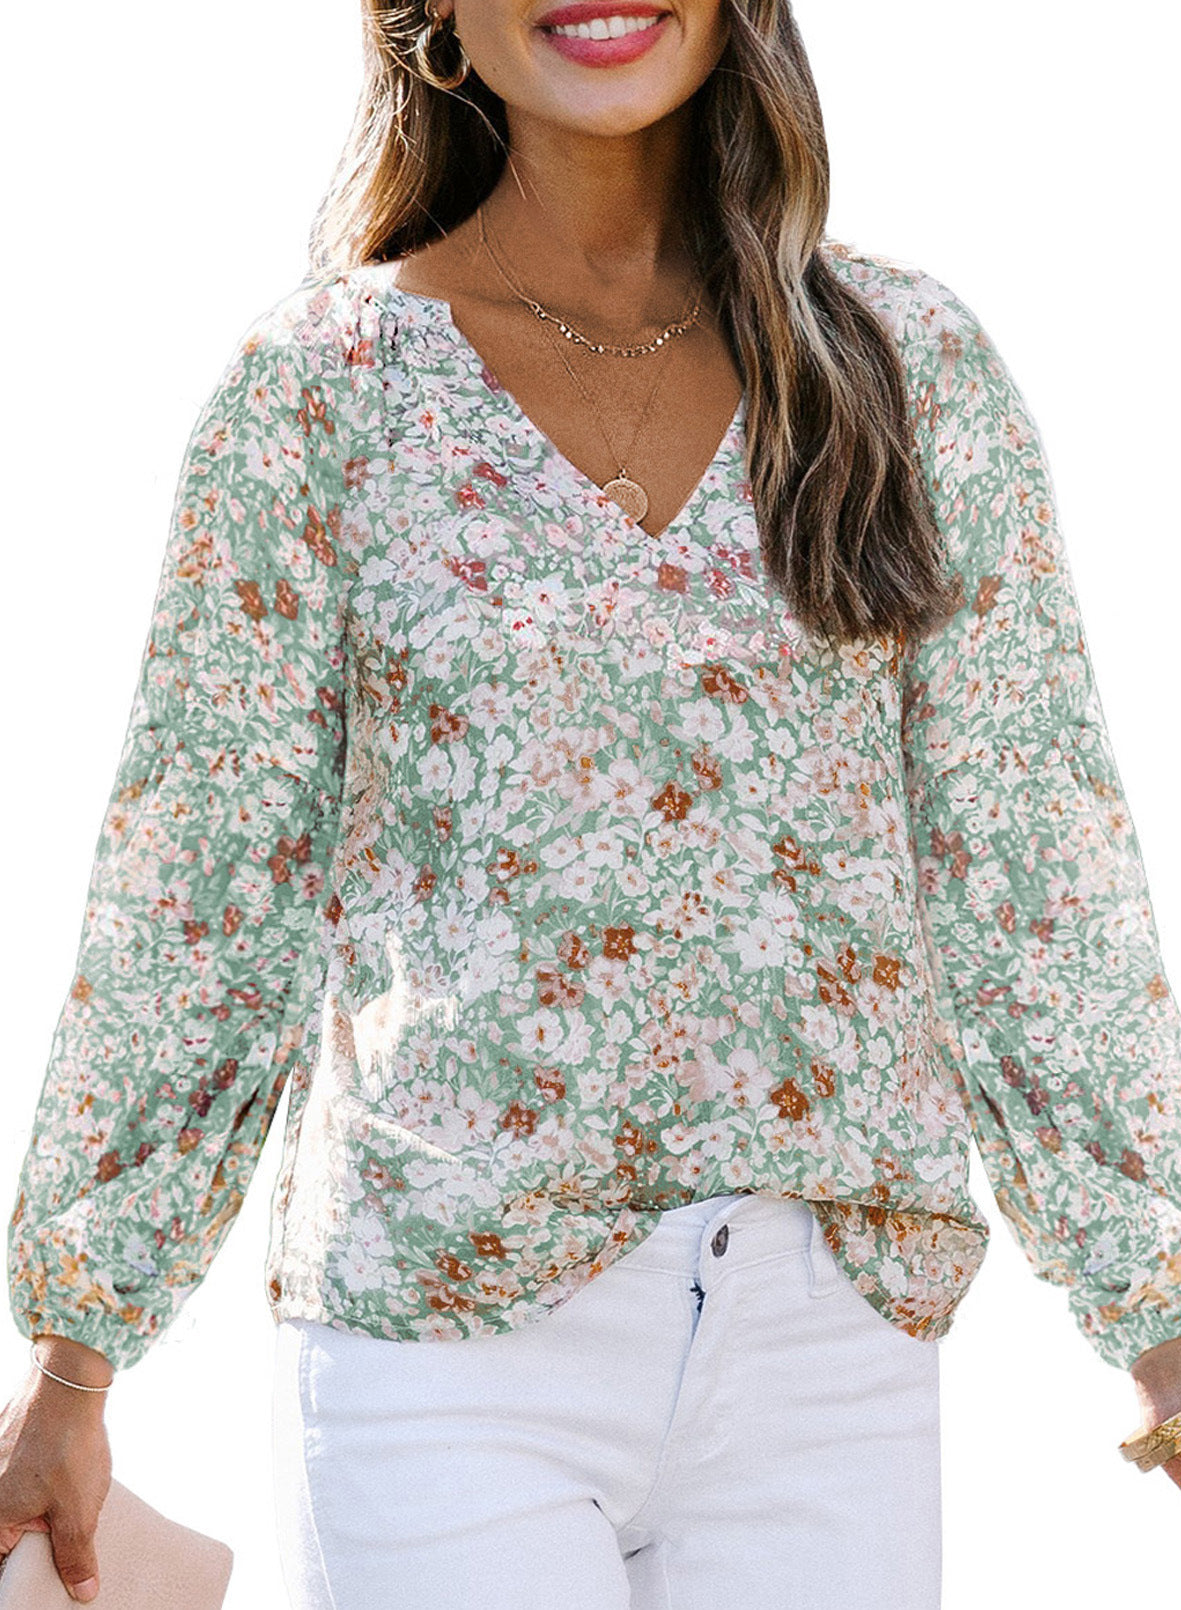 Mujeres con blusas de gasa en V blusas de aire fresco Camisa floral de manga de linterna